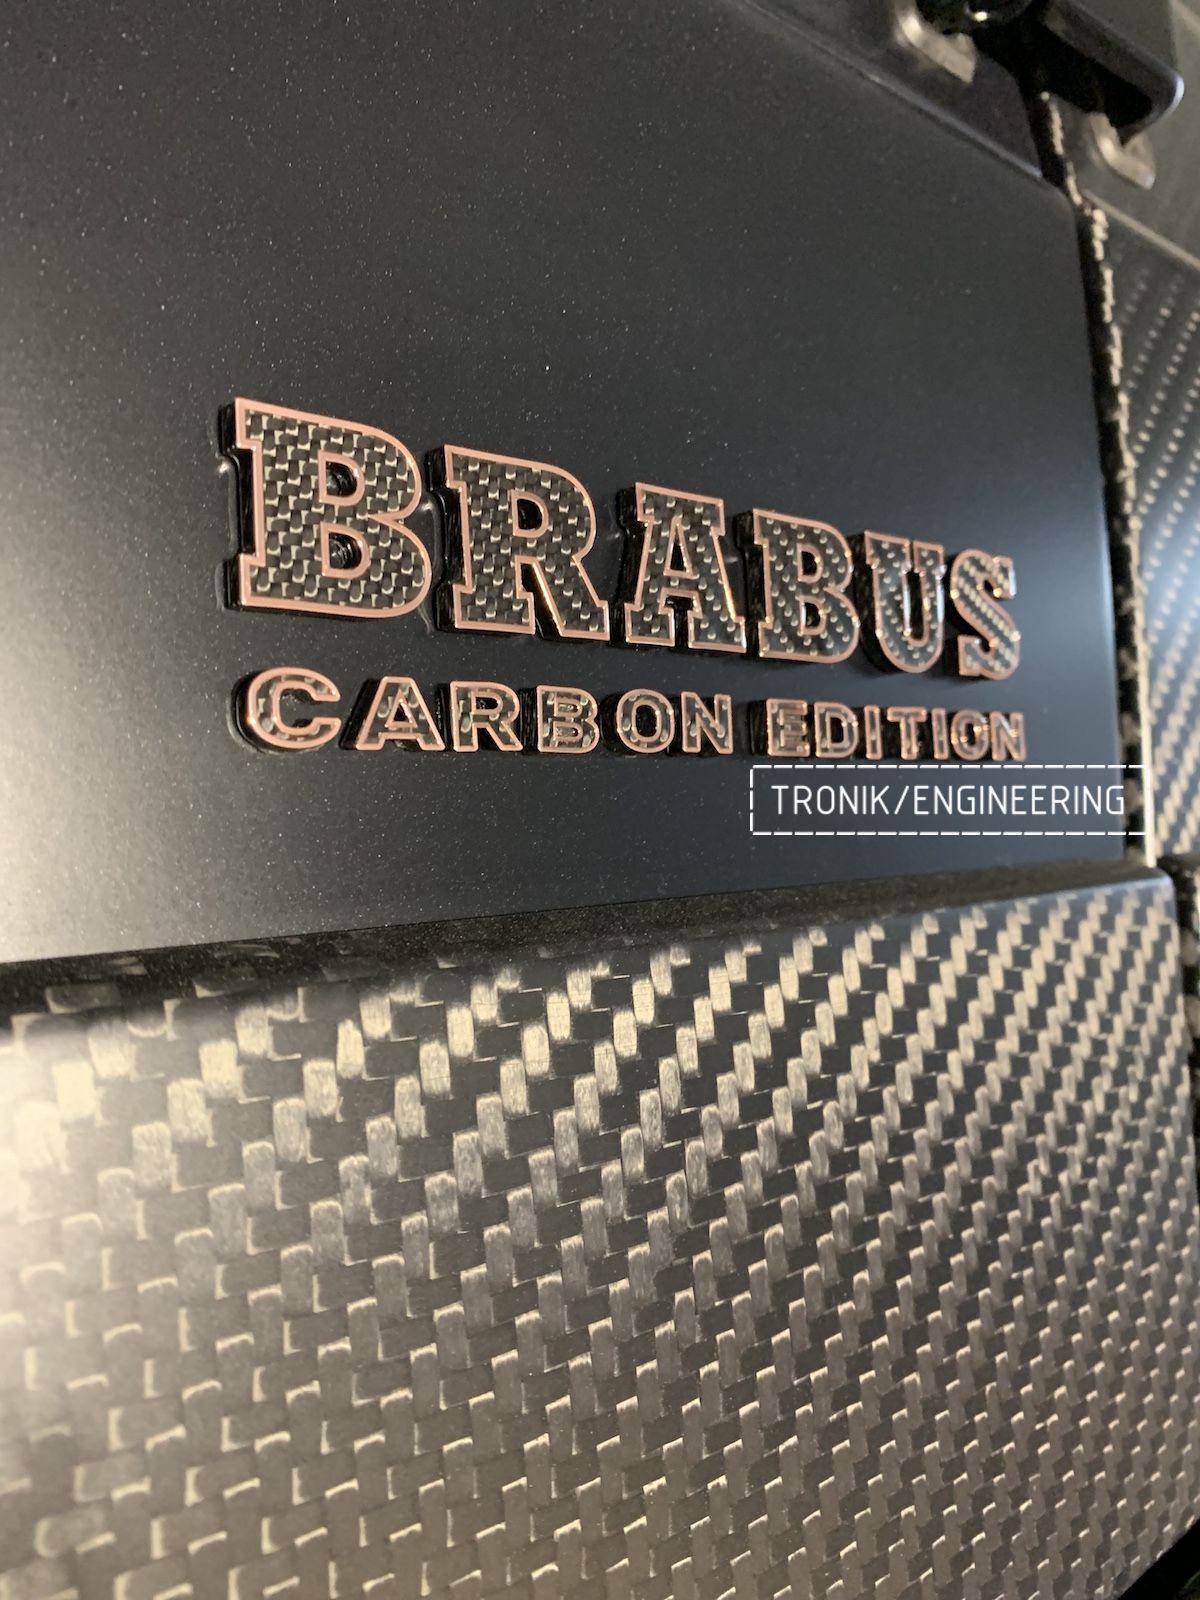 Brabus carbon edition